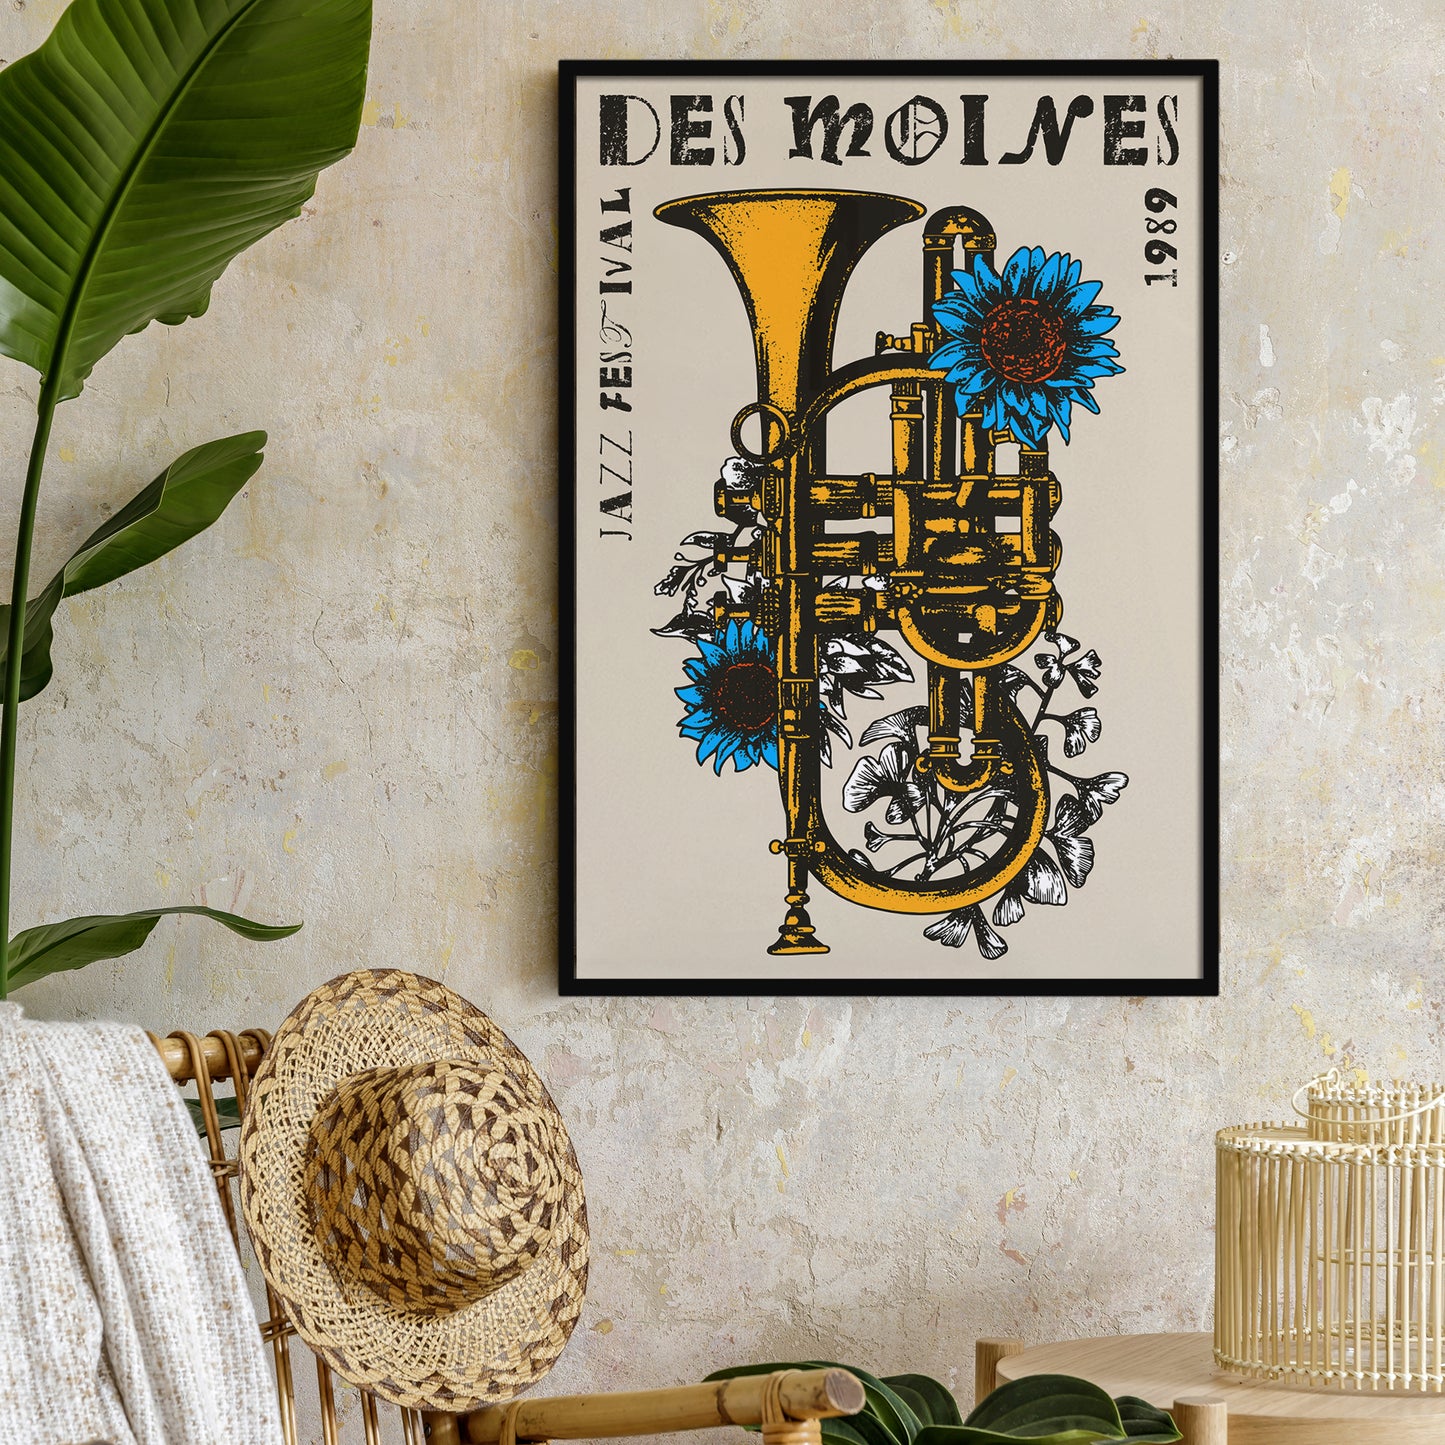 Des Moines Jazz Festival vintage poster